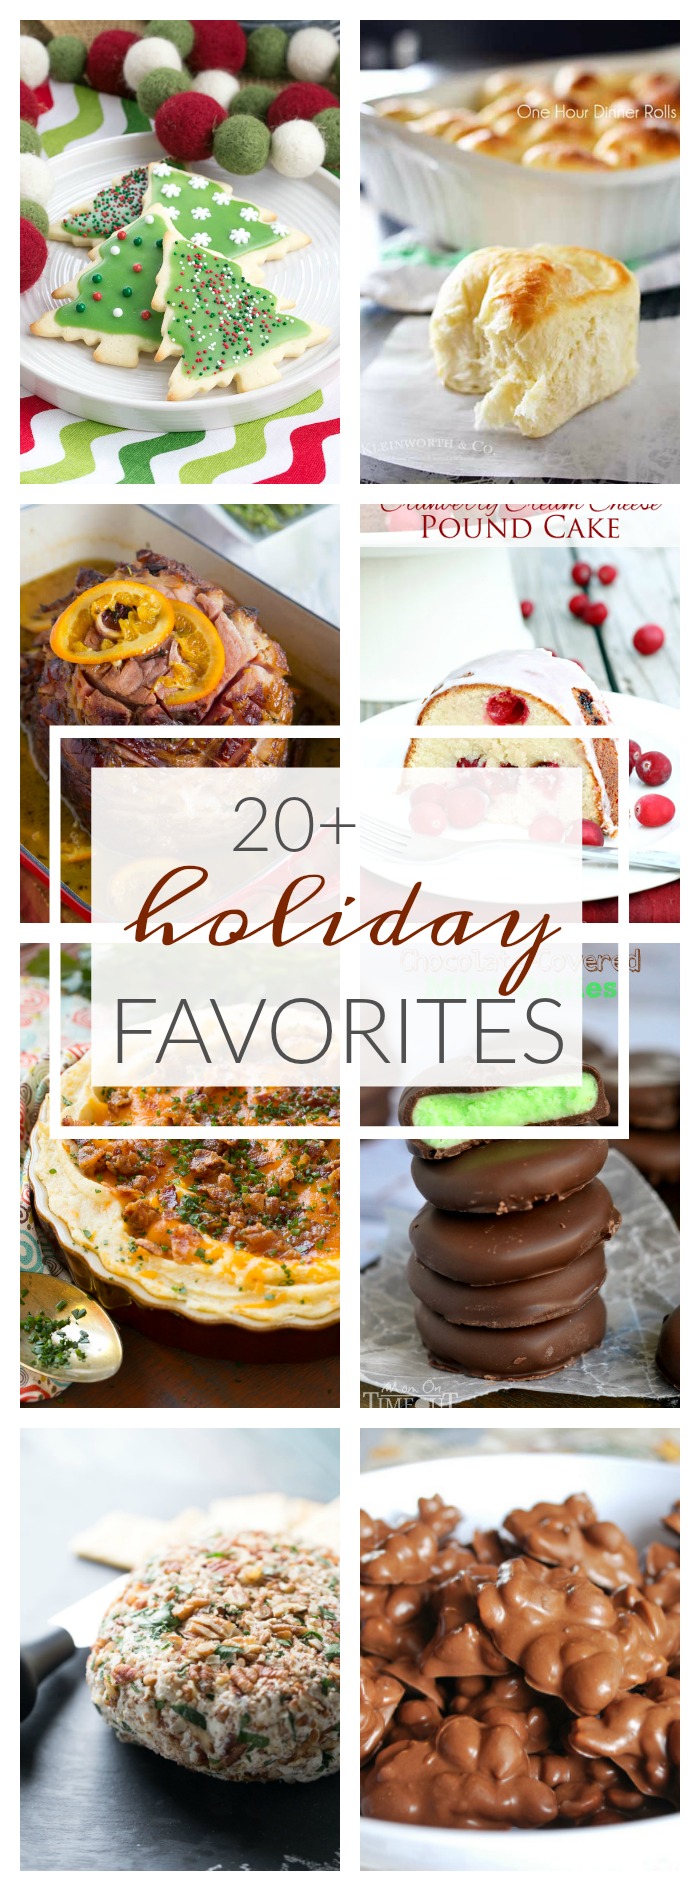 20+ Holiday Favorites